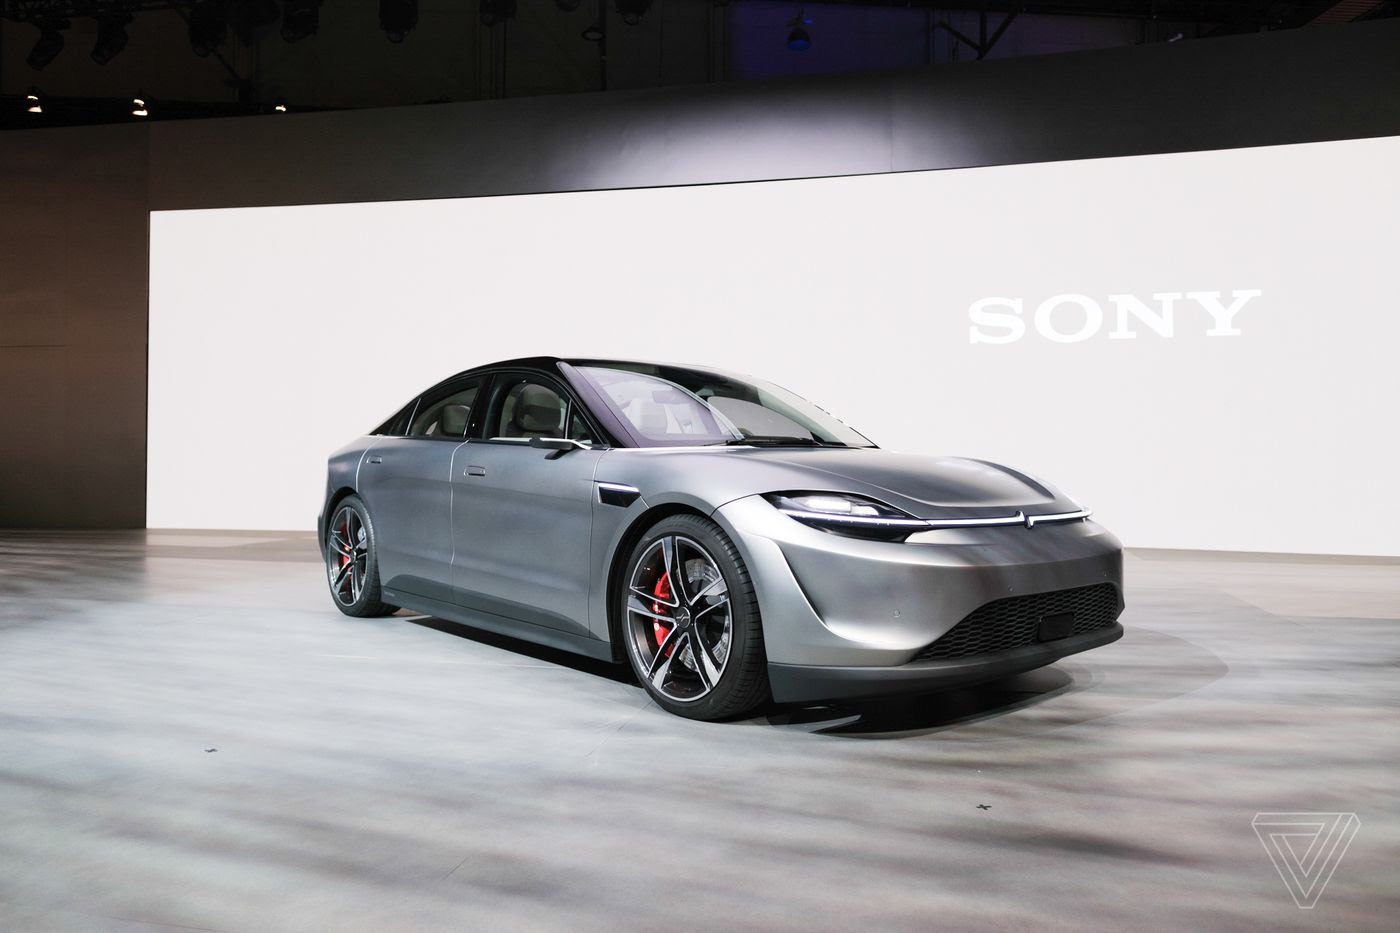 Sony Pamerkan Prototipe Mobil Listrik di CES 2020